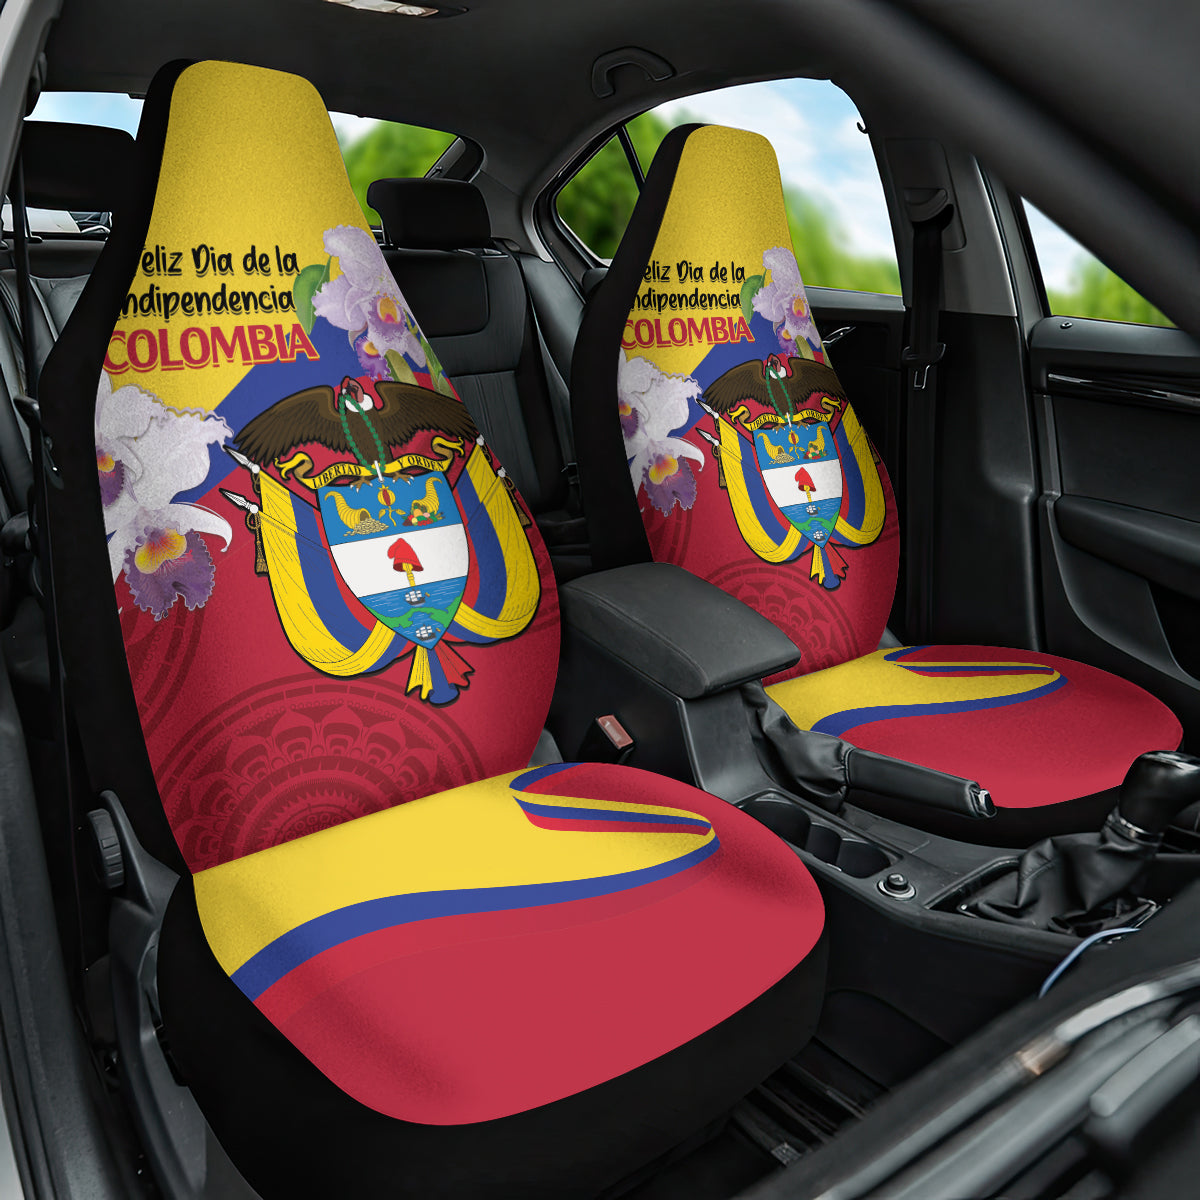 Colombia Independence Day Car Seat Cover Feliz Dia de la Independencia